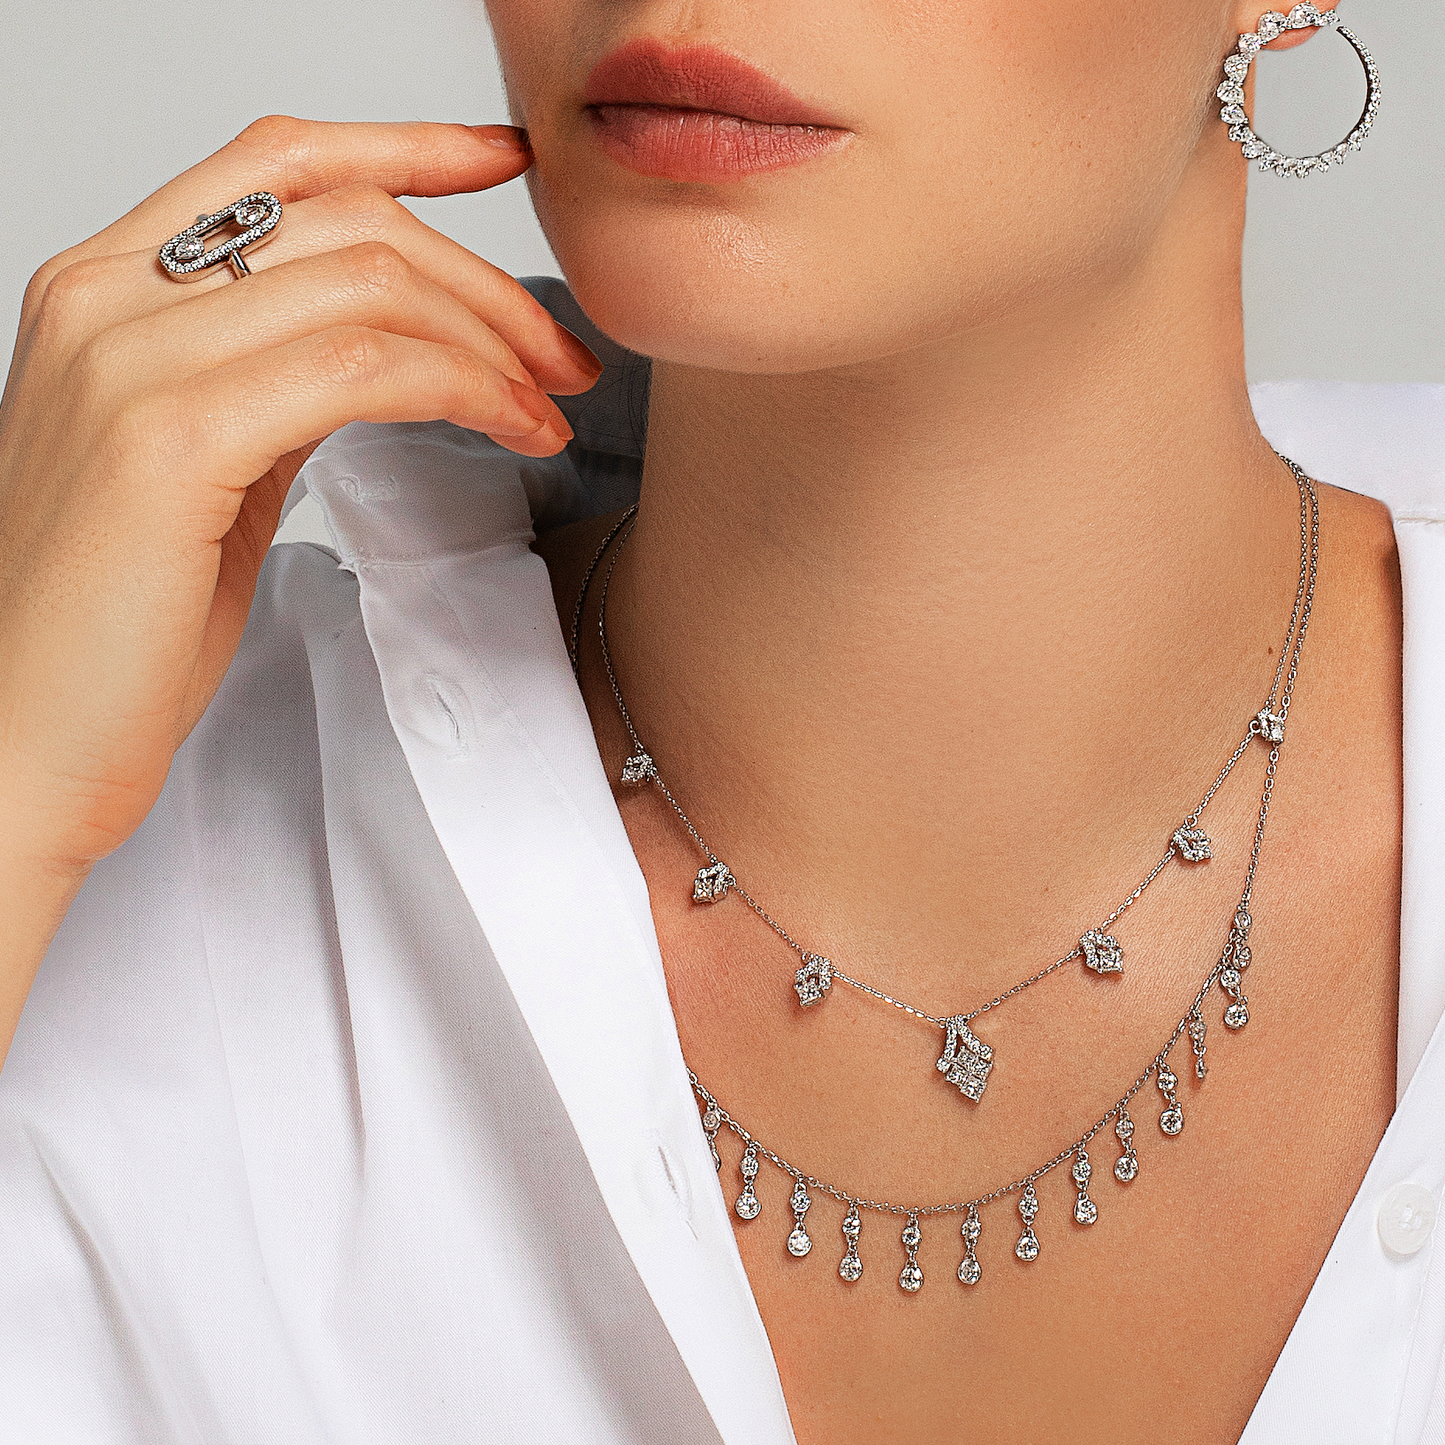 Chandelier Diamond Charm Necklace